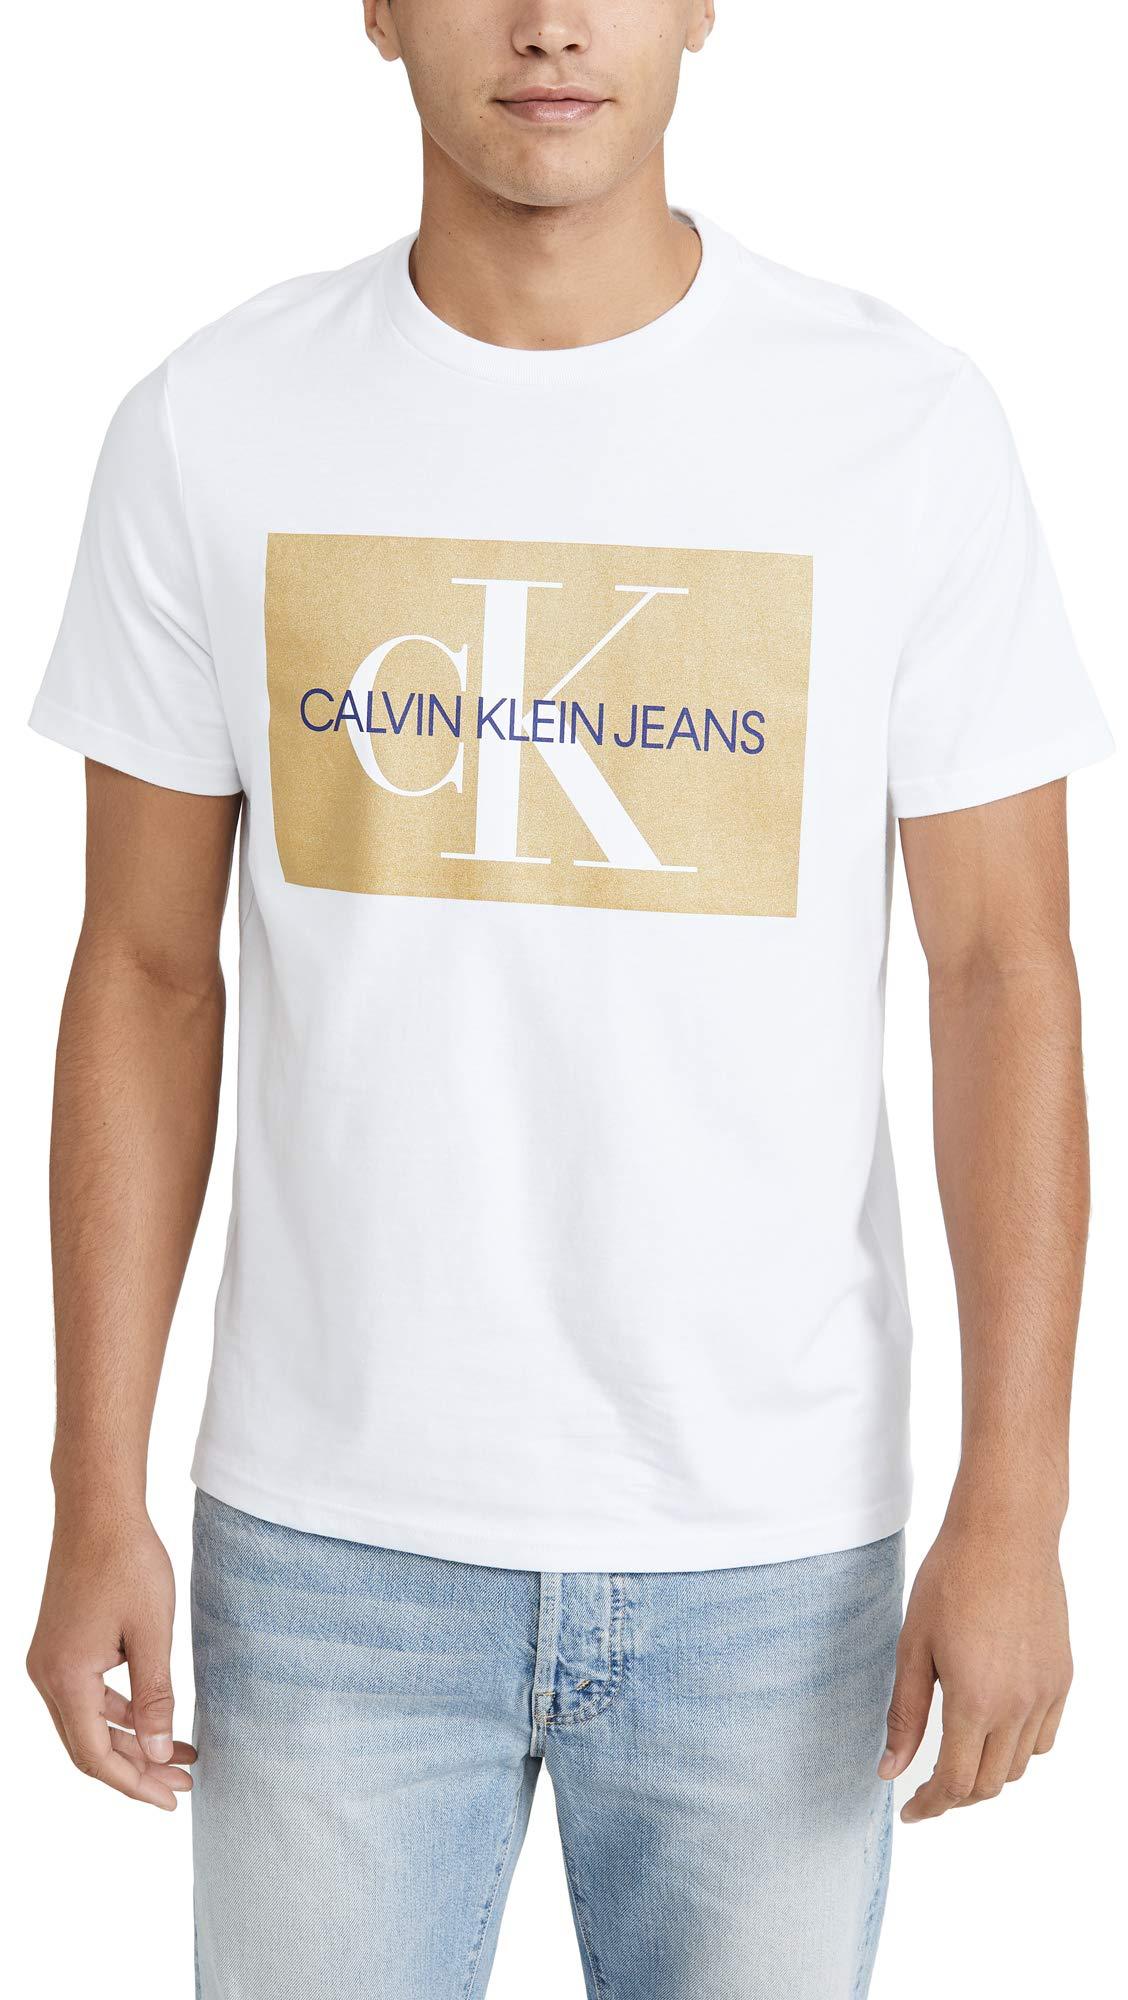 discount 64% WOMEN FASHION Shirts & T-shirts T-shirt Basic Calvin Klein T-shirt White M 